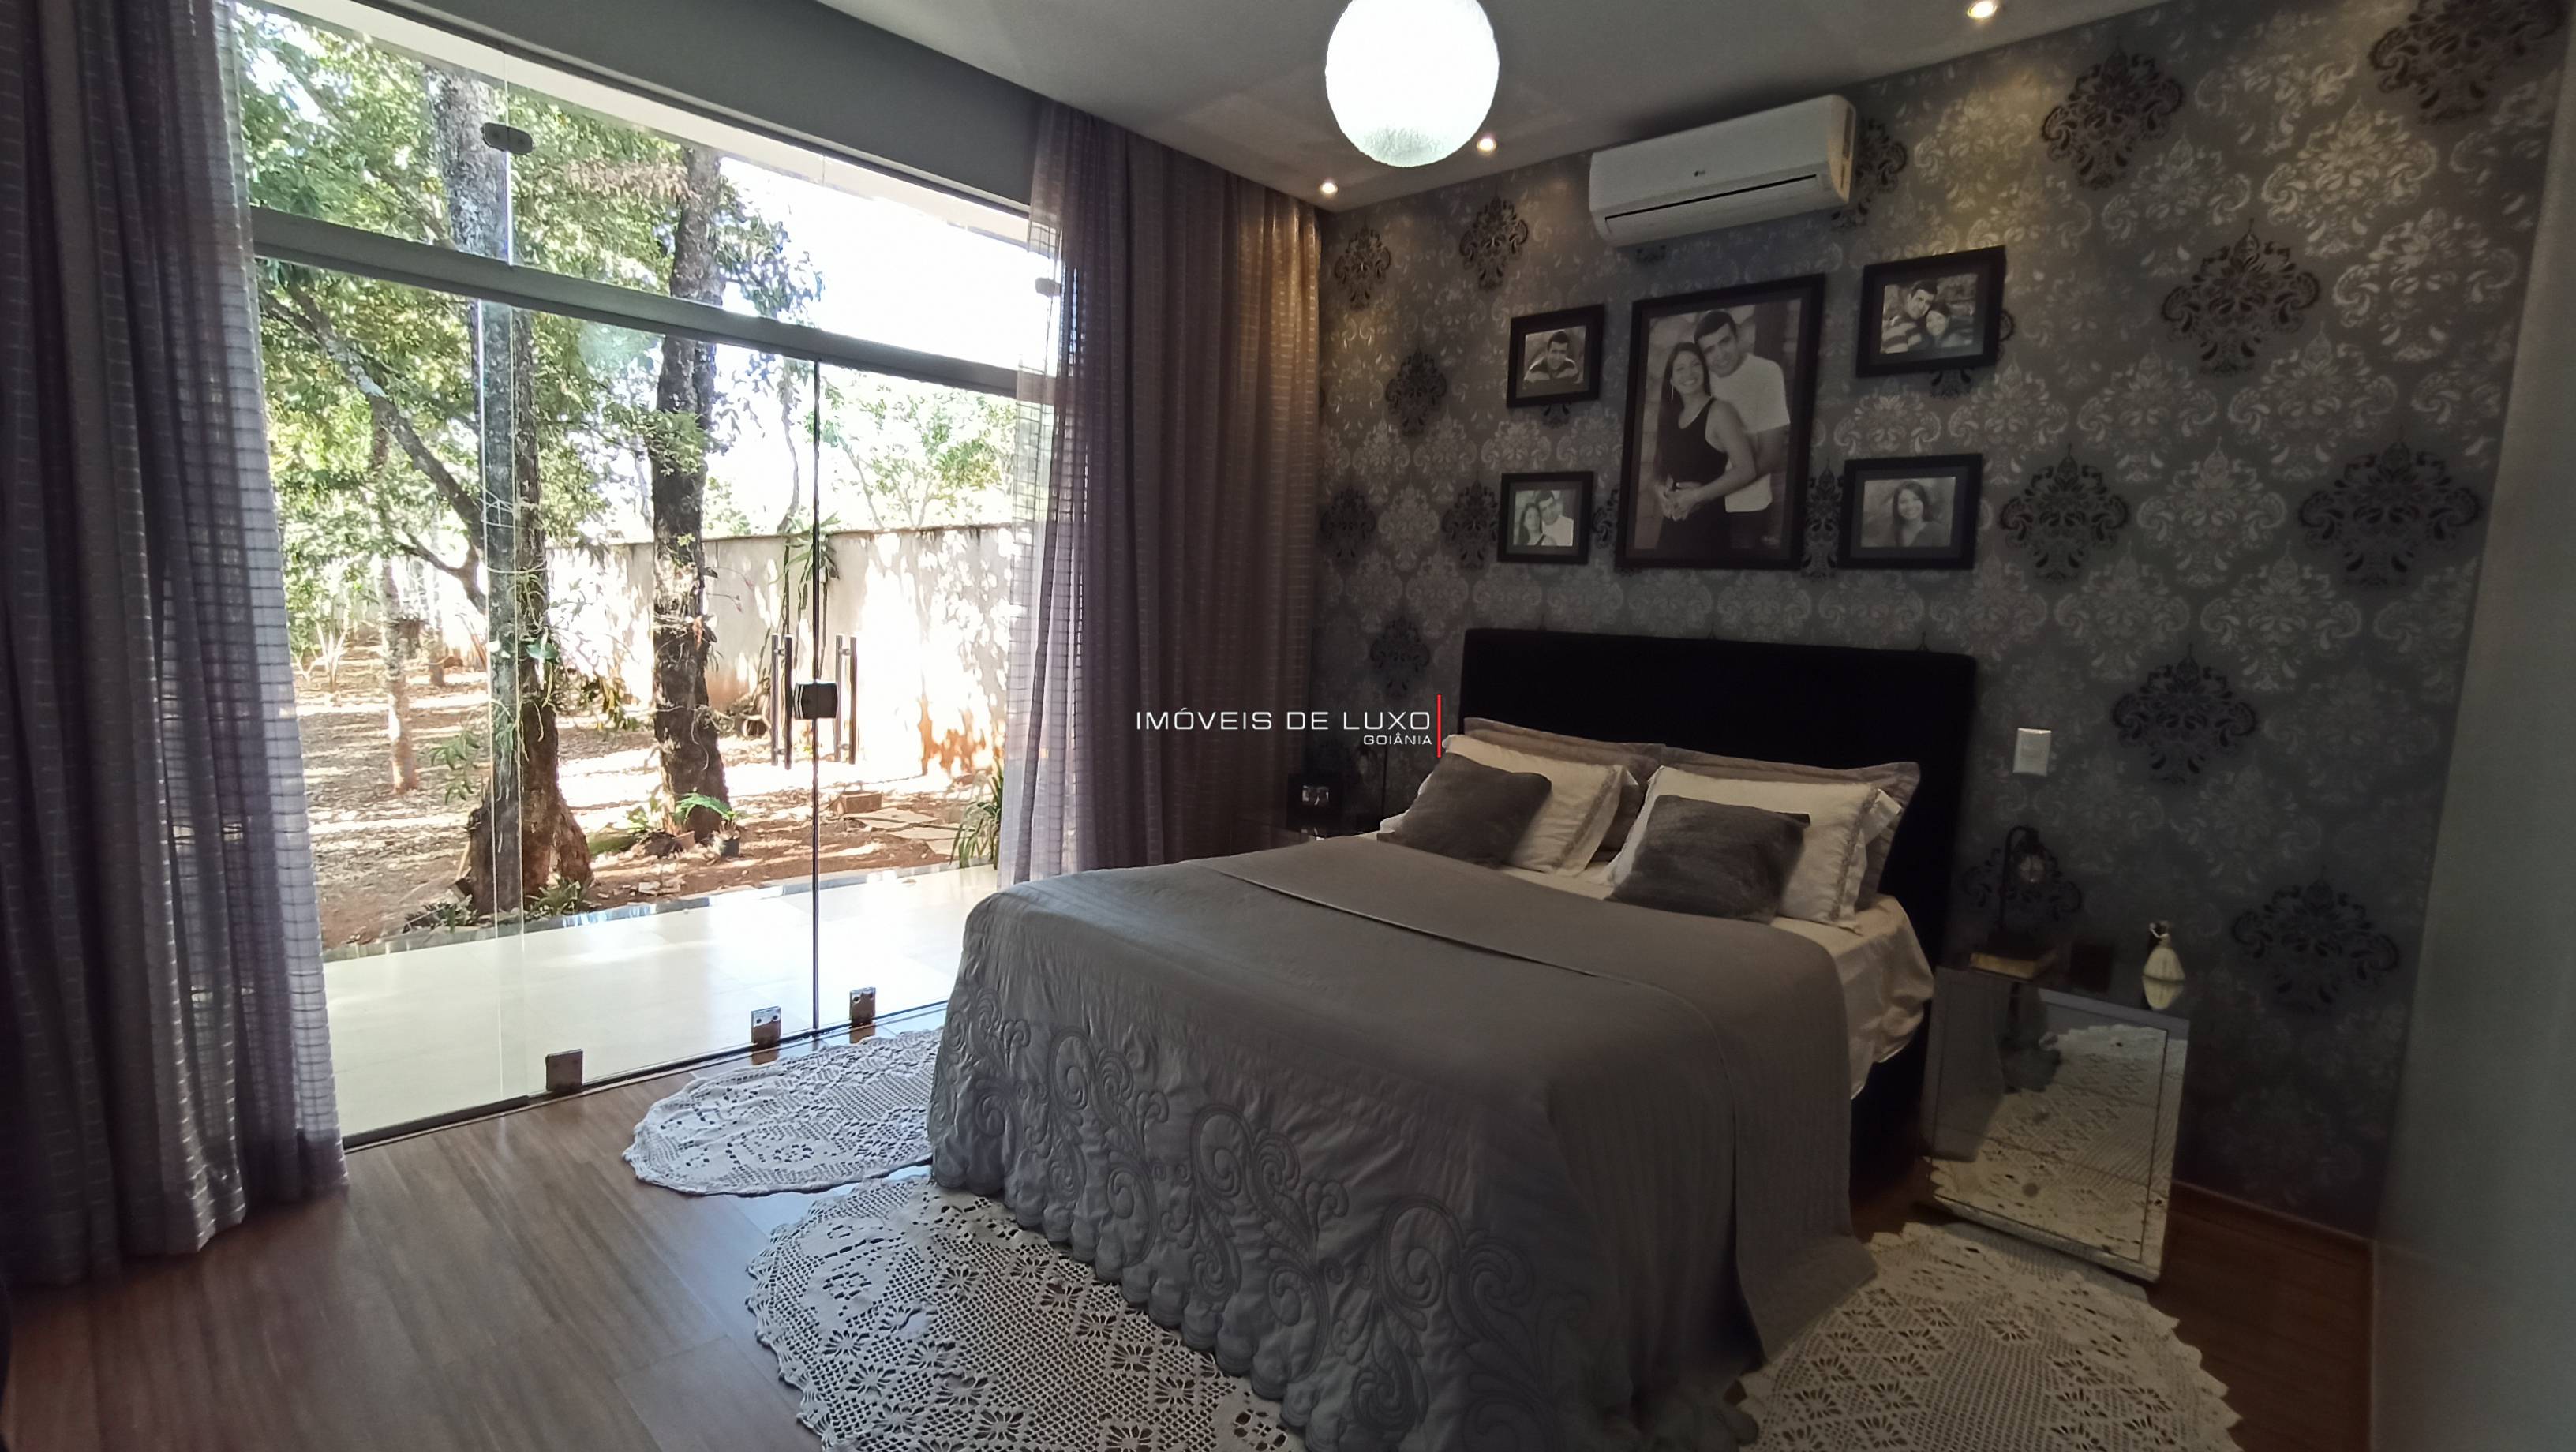 Imóveis de Luxo - Casa com 3 quartos sendo 1 suite Condominio Villa Verde